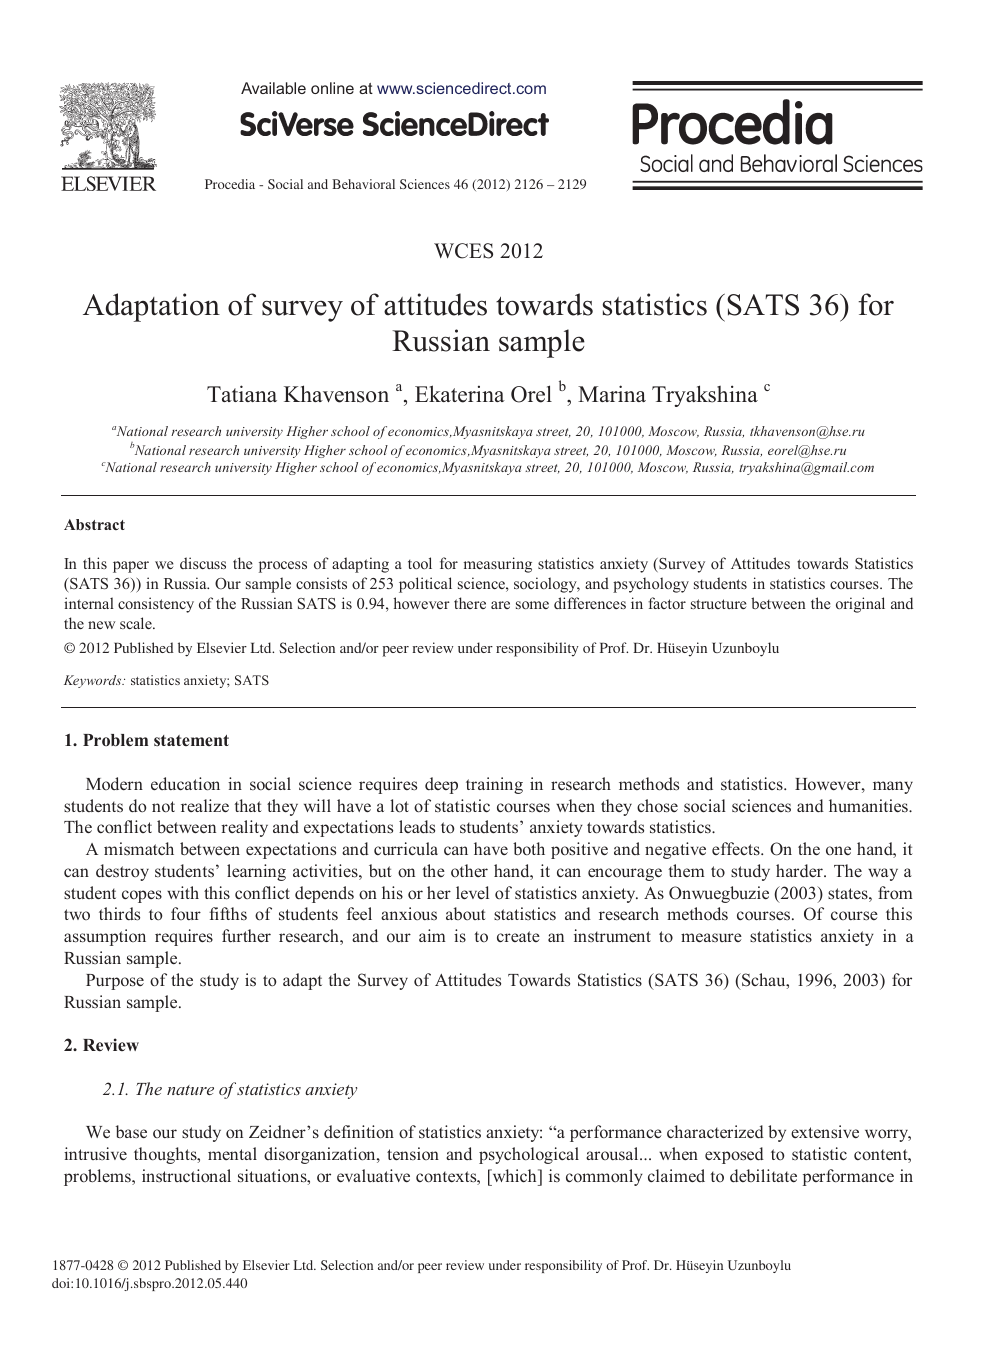 Adaptation of Survey of Attitudes Towards Statistics (SATS 9) for